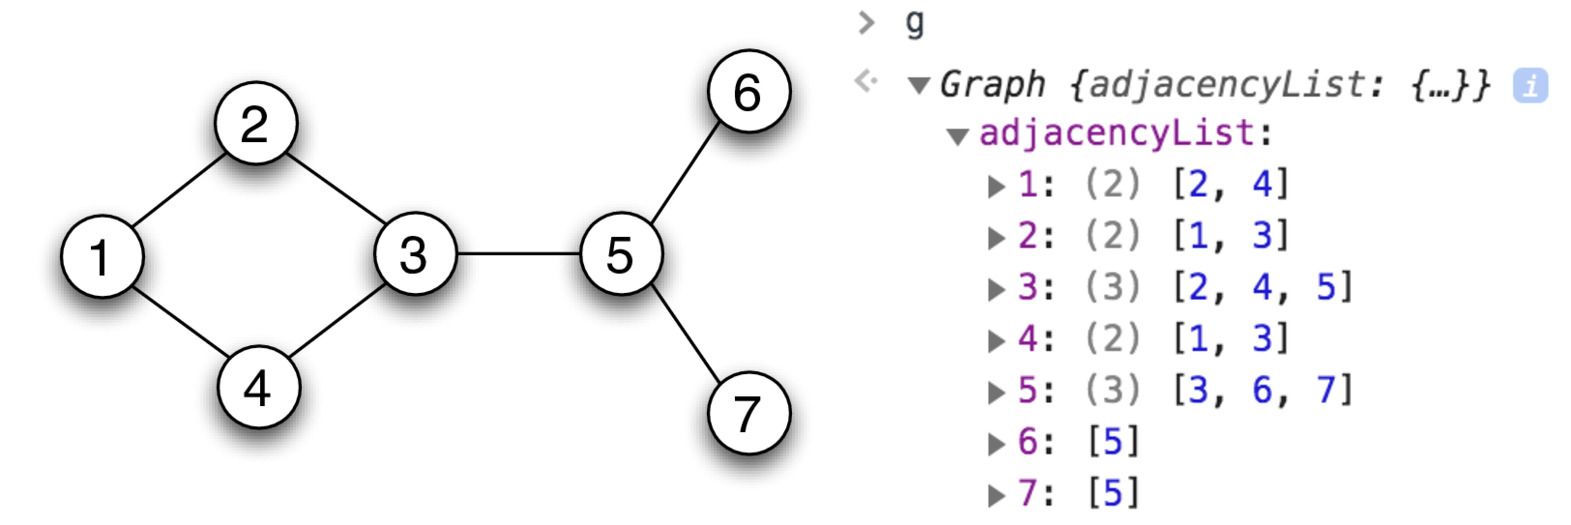 image_1_graphs